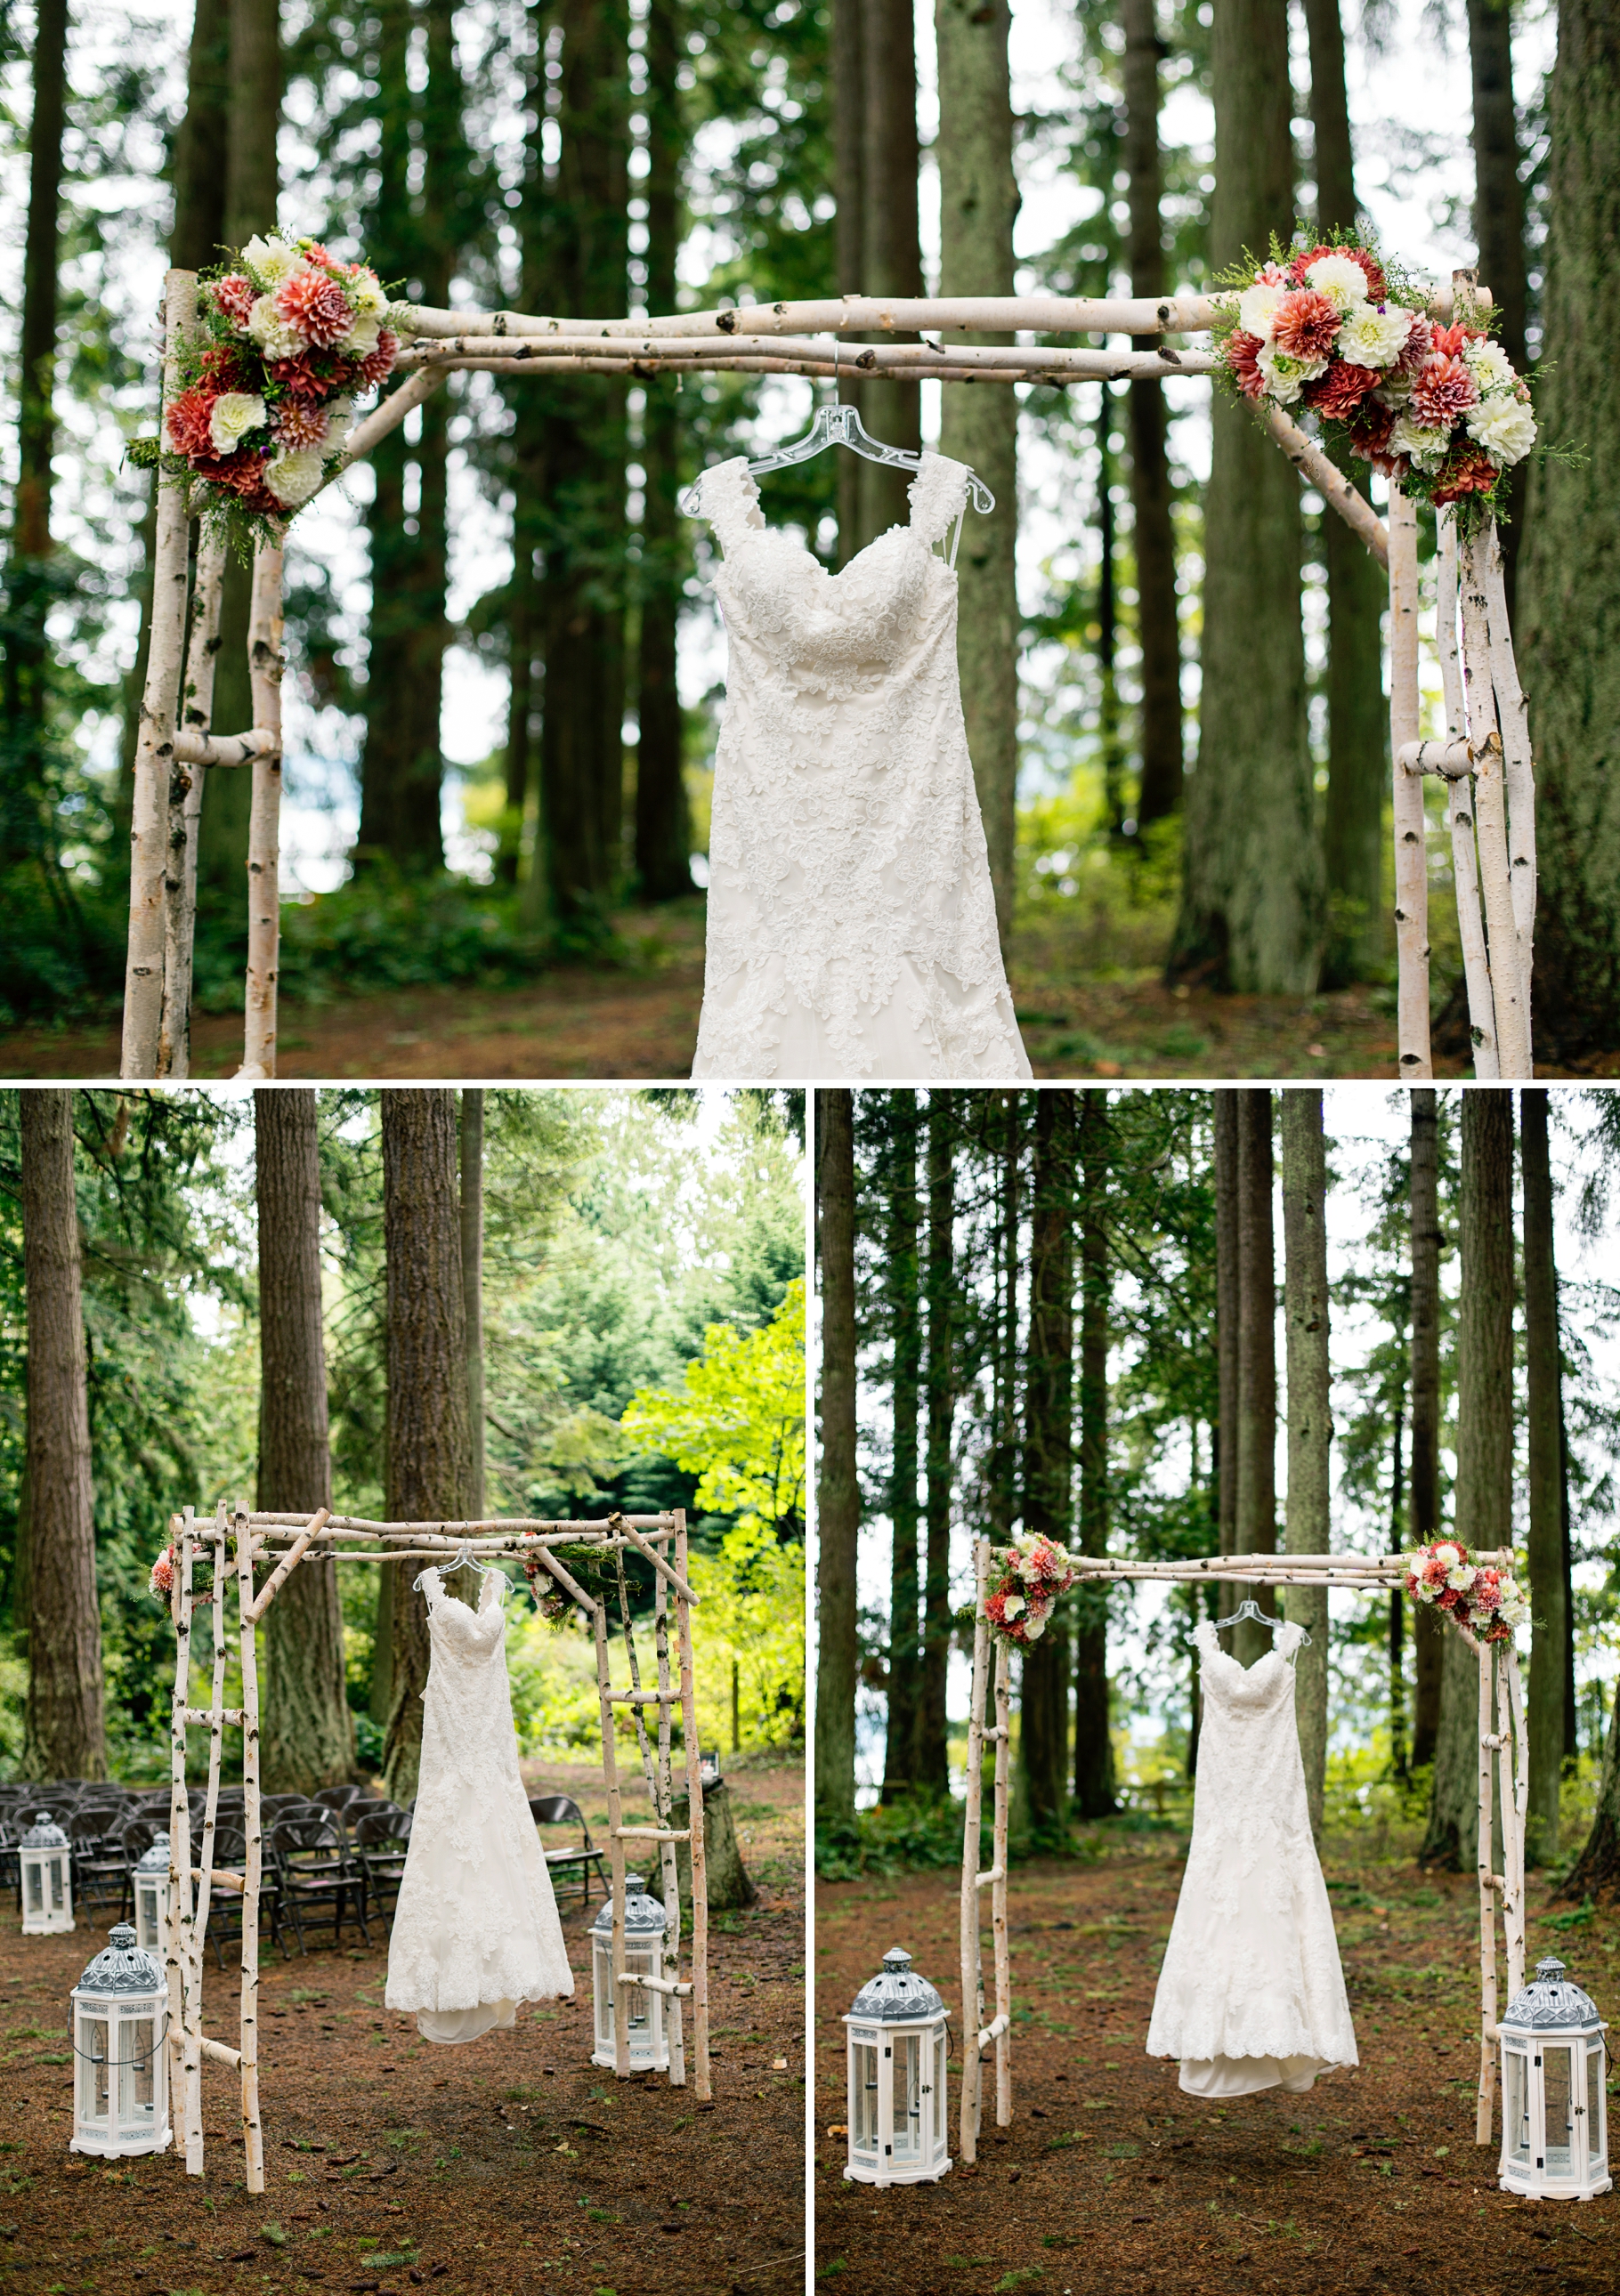 1-Kitsap-Memorial-State-Park-Wedding-Dress-Chuppah-Birch-Tree-Branches-Arbor-Forest-Northwest-Photographer-Seattle-Wedding-Photography-by-Betty-Elaine